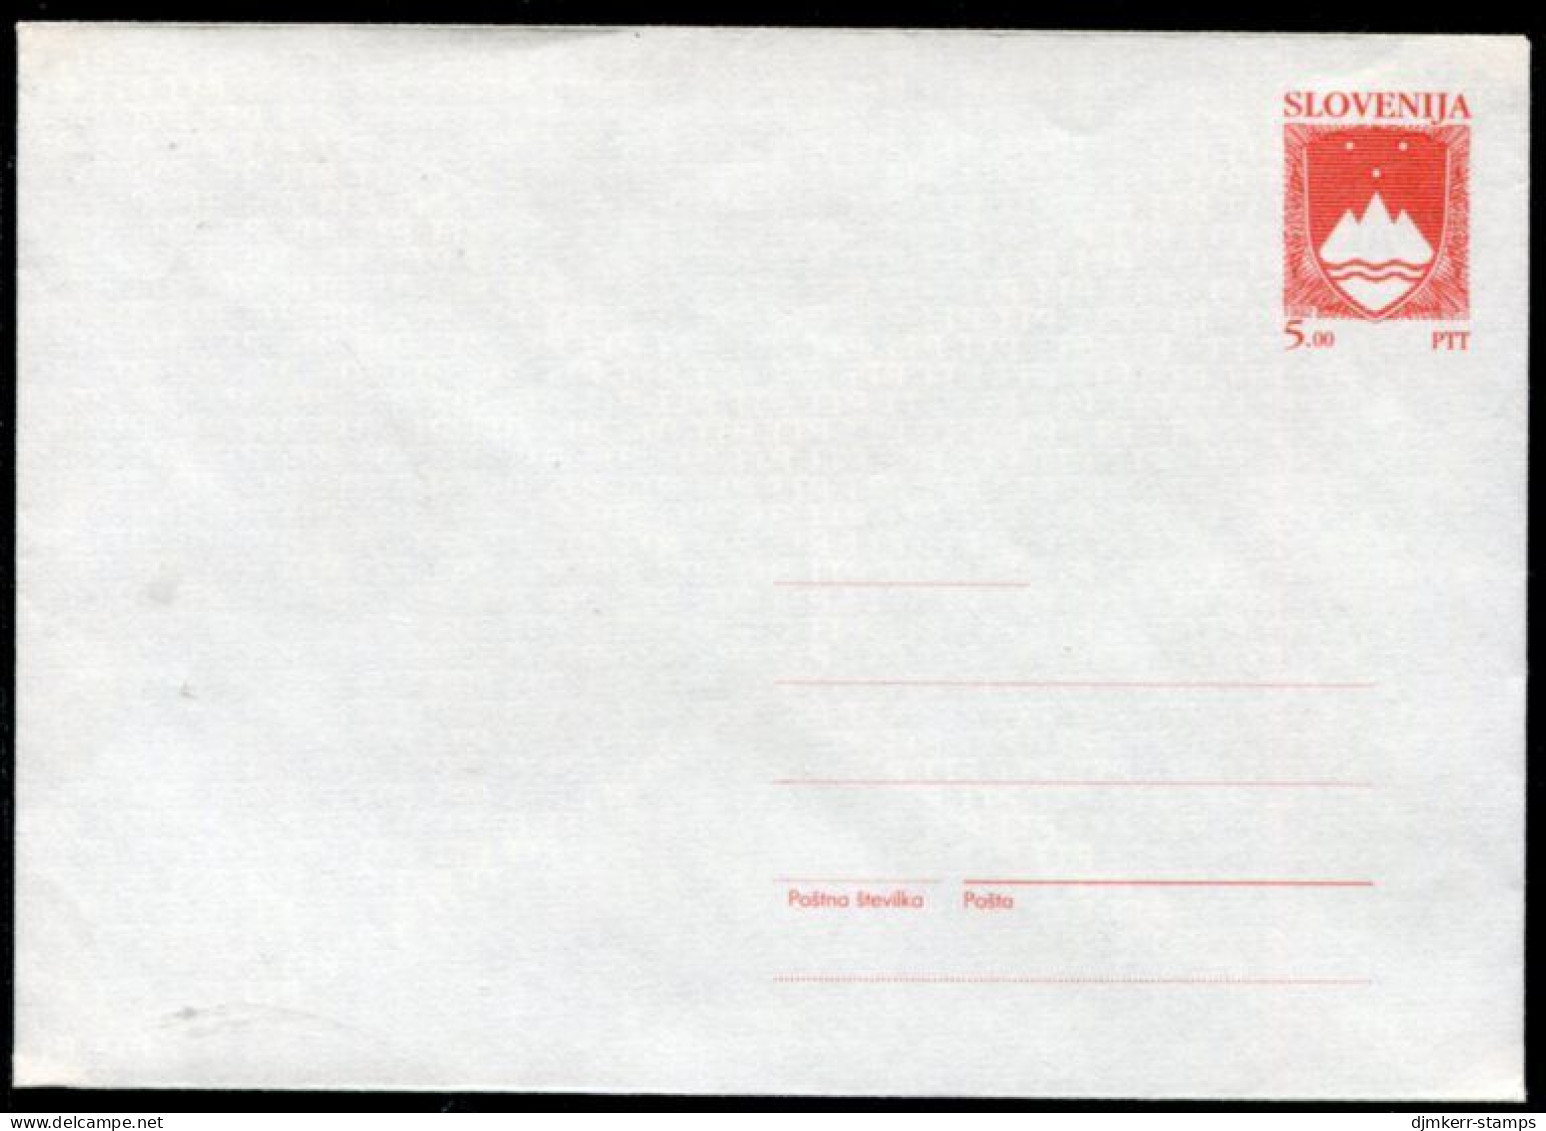 SLOVENIA 1992 5.00 T.  Postal Stationery Envelope On White Paper, Unused.  Michel U1a - Slovénie